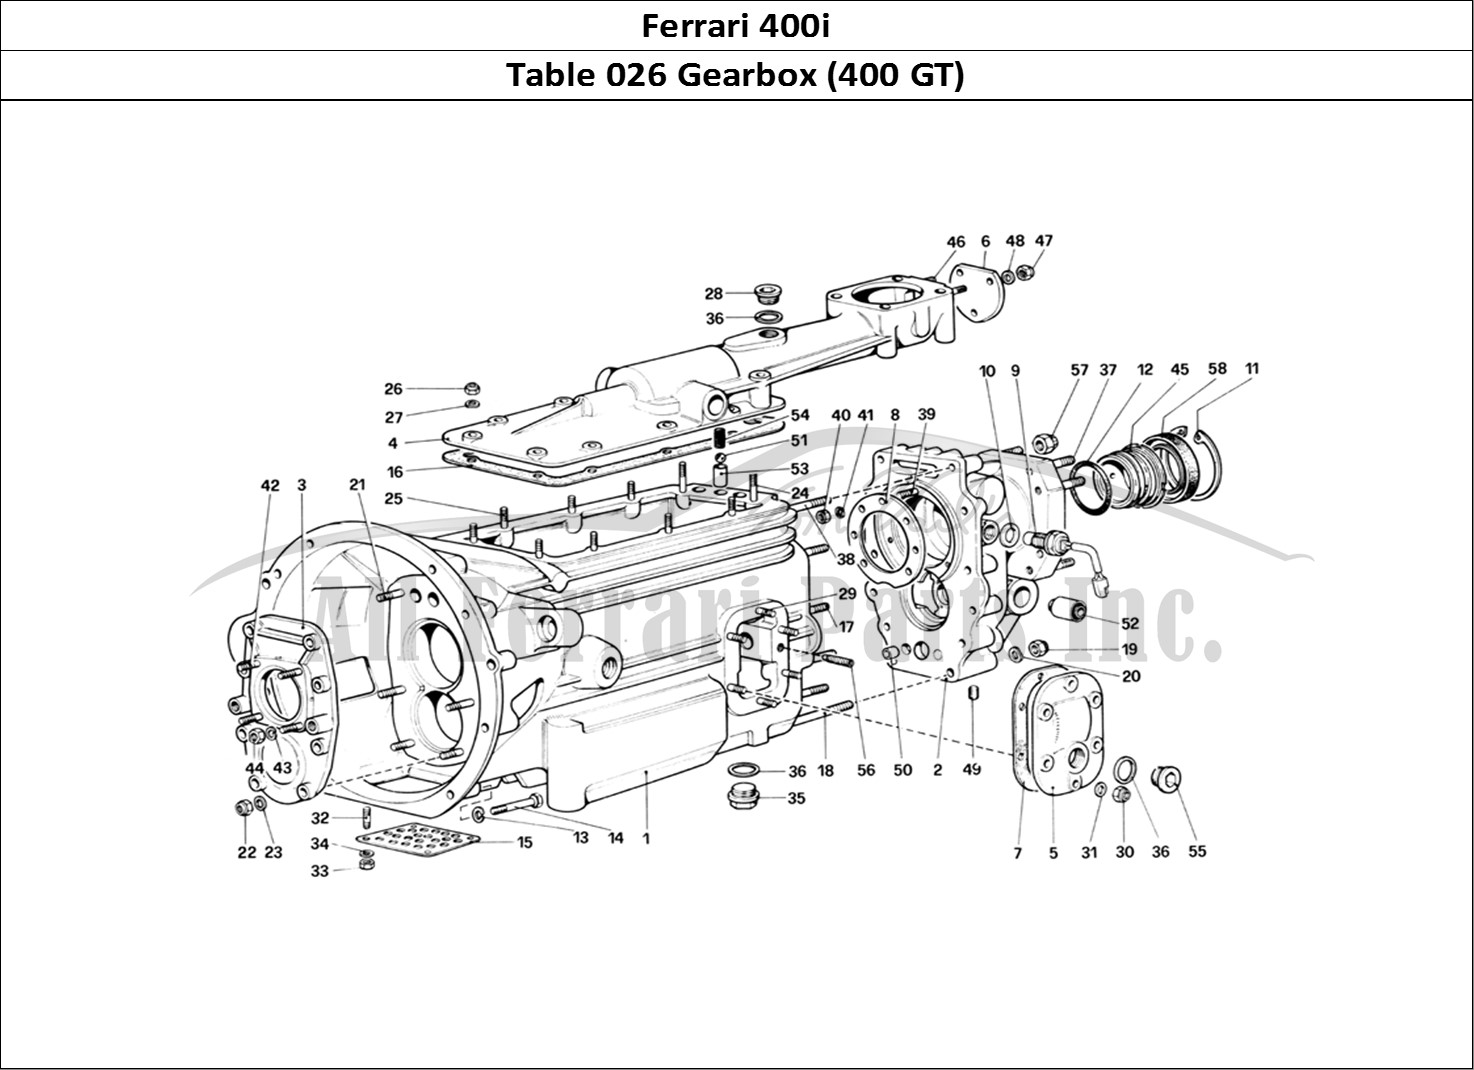 Ferrari Parts Ferrari 400i (1983 Mechanical) Page 026 Gearbox (400 GT)